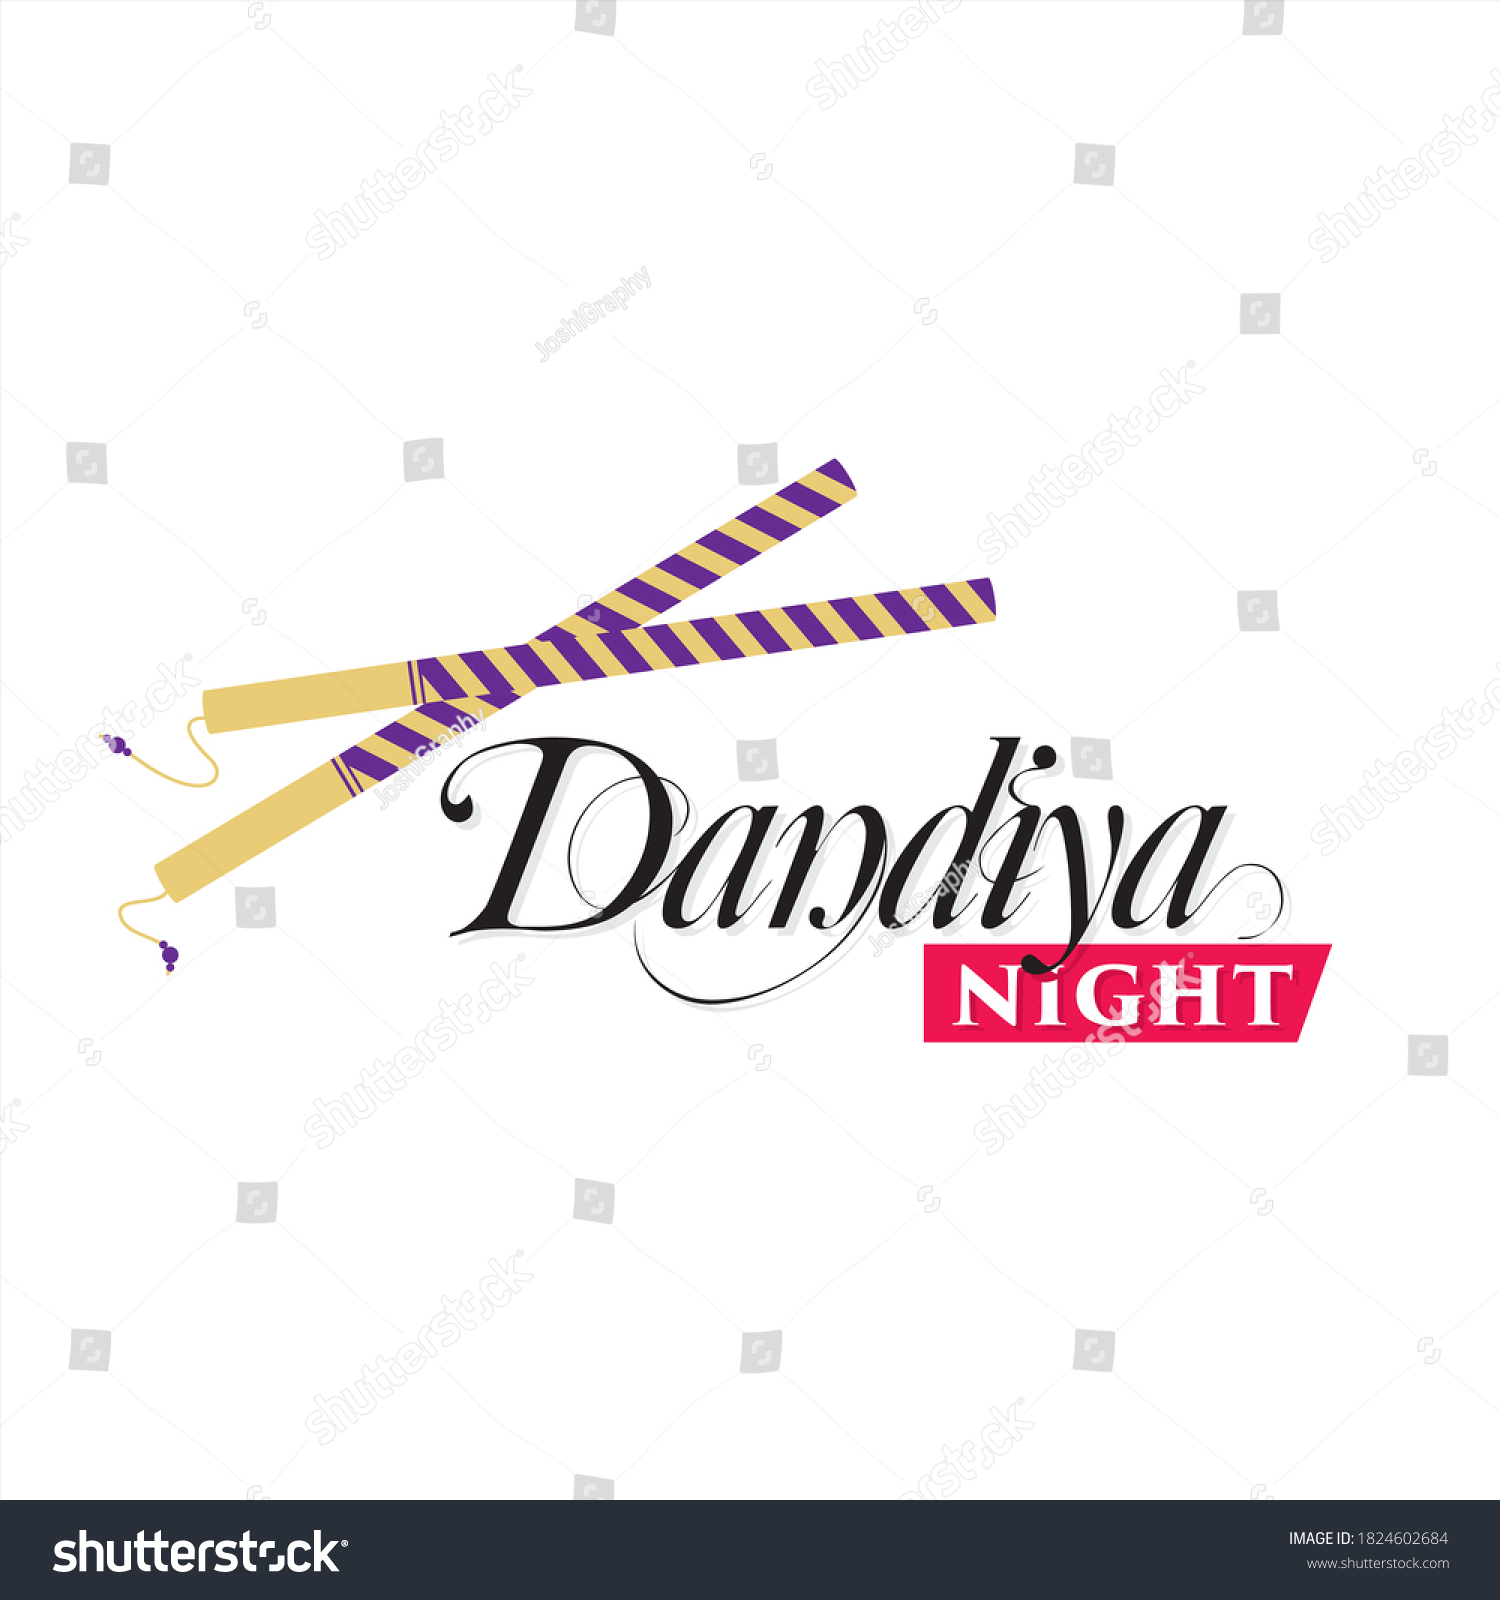 SVG of Dandiya Night Calligraphy with Dandiya Sticks - Illustration svg